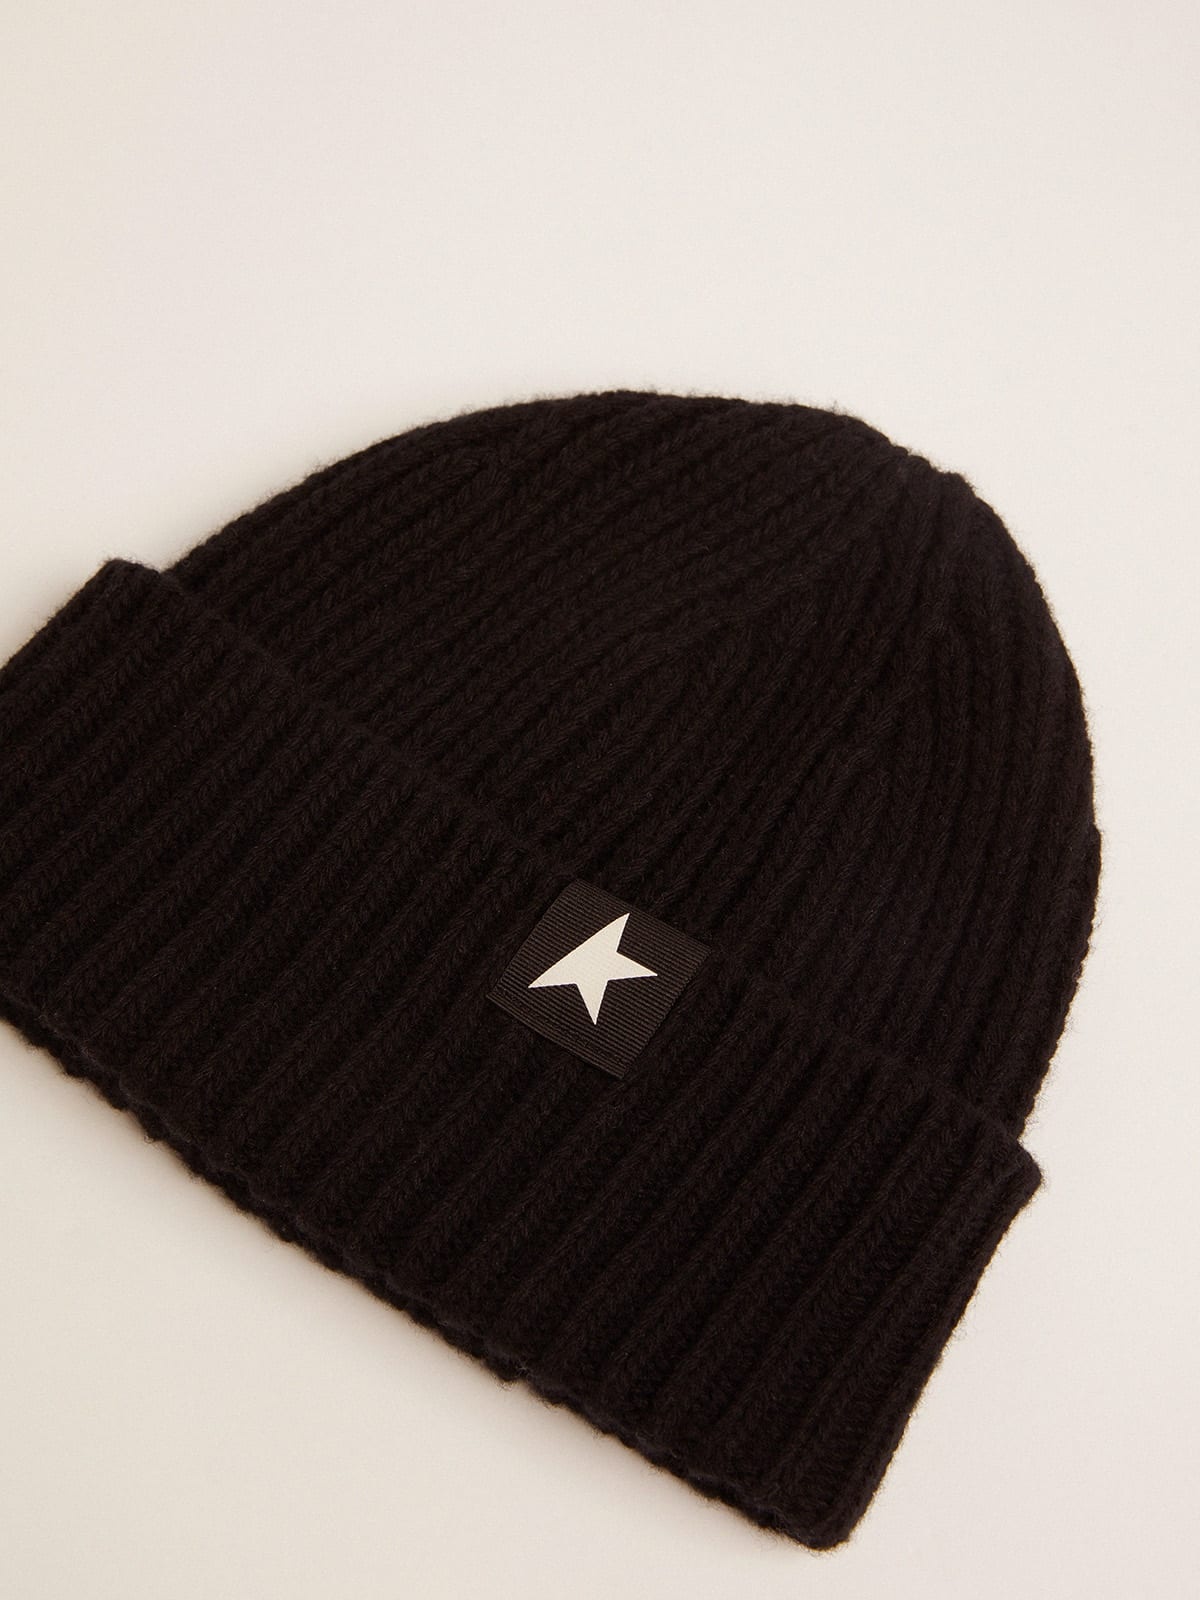 Black wool beanie with white star - 2